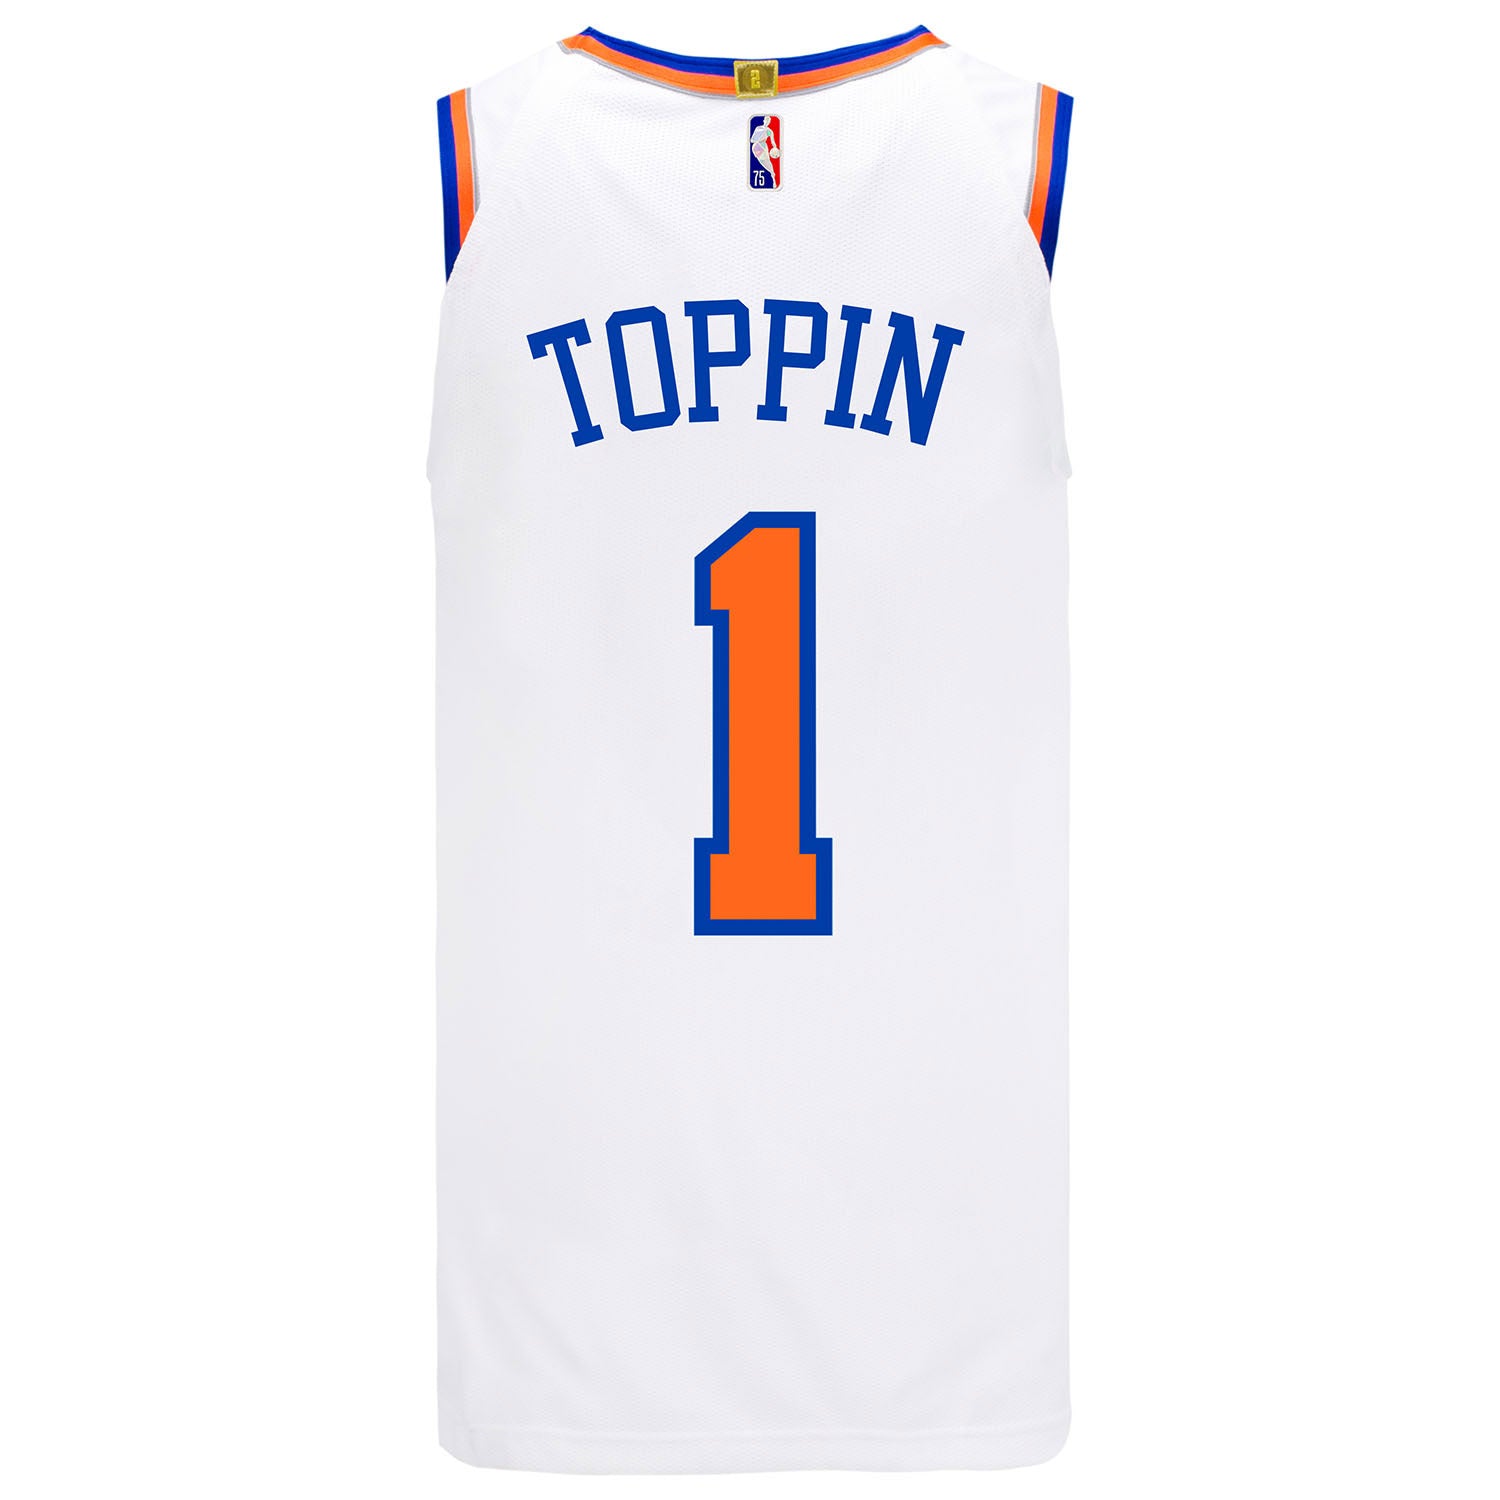 Obi Toppin New York Knicks Game-Used #1 White Jersey vs. Detroit